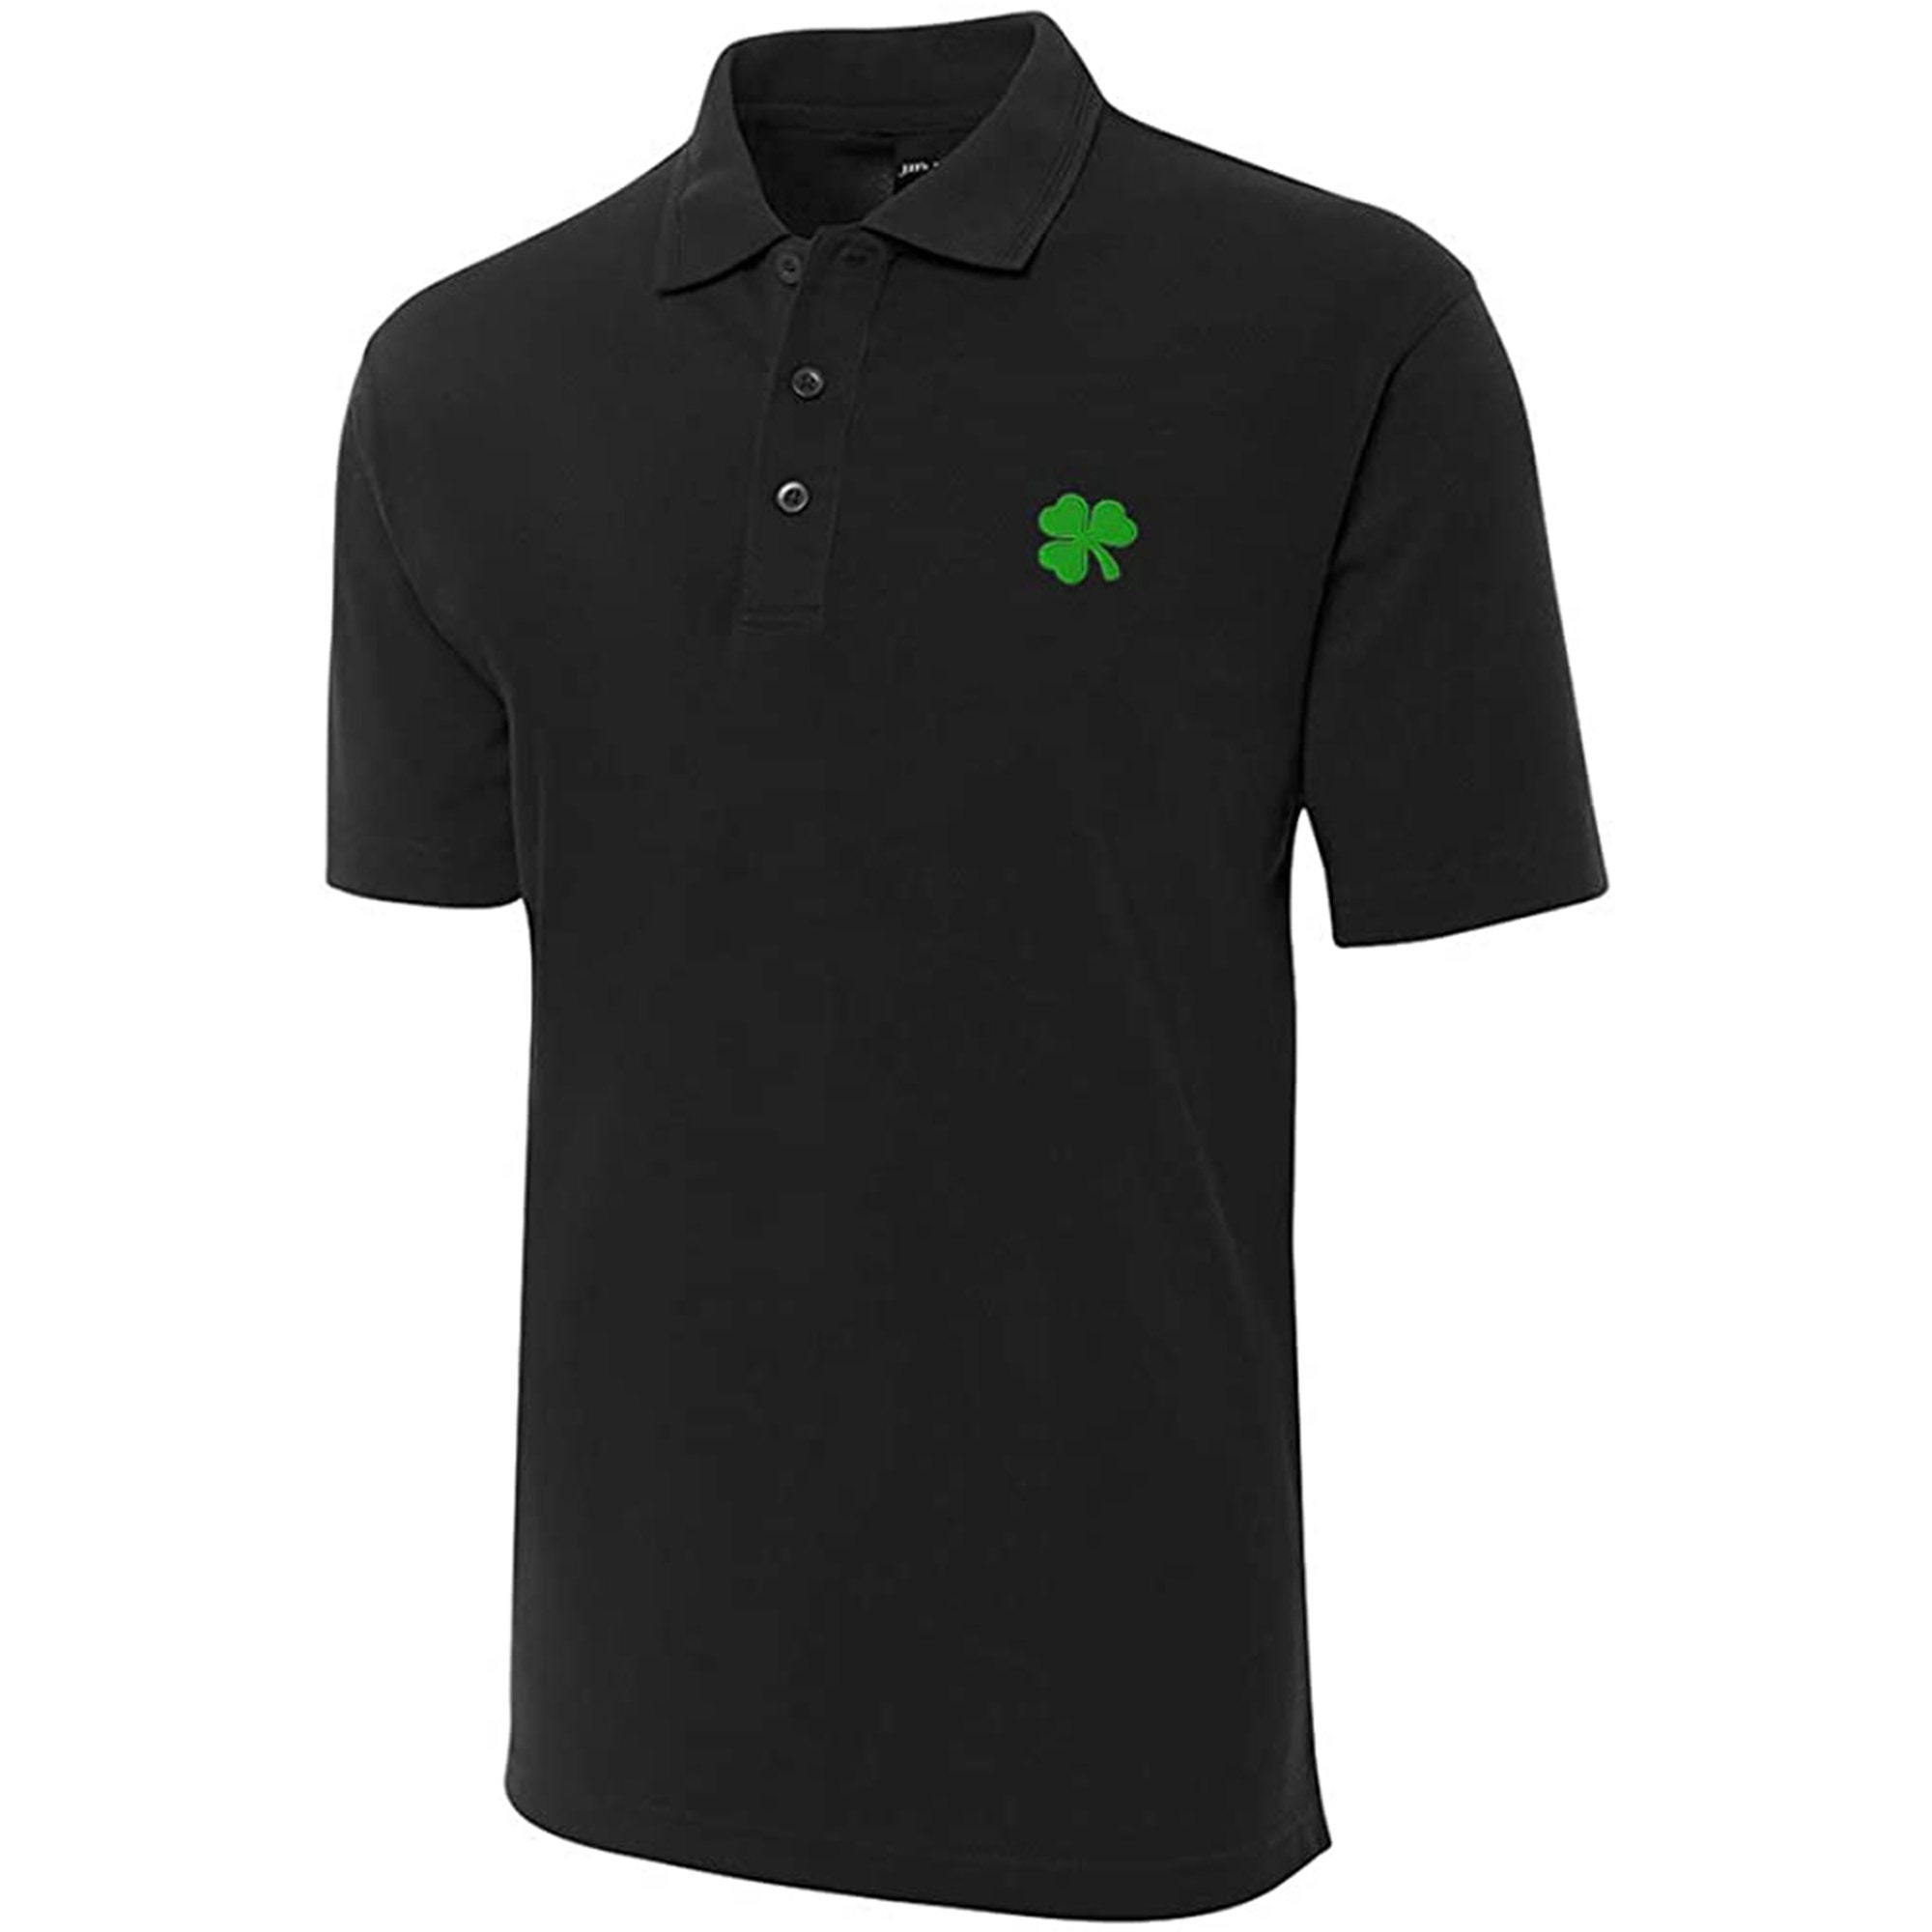 Green Irish Shamrock Embroidered Short Sleeve Polo Shirts Classic Embroidery Men's Polo Shirt